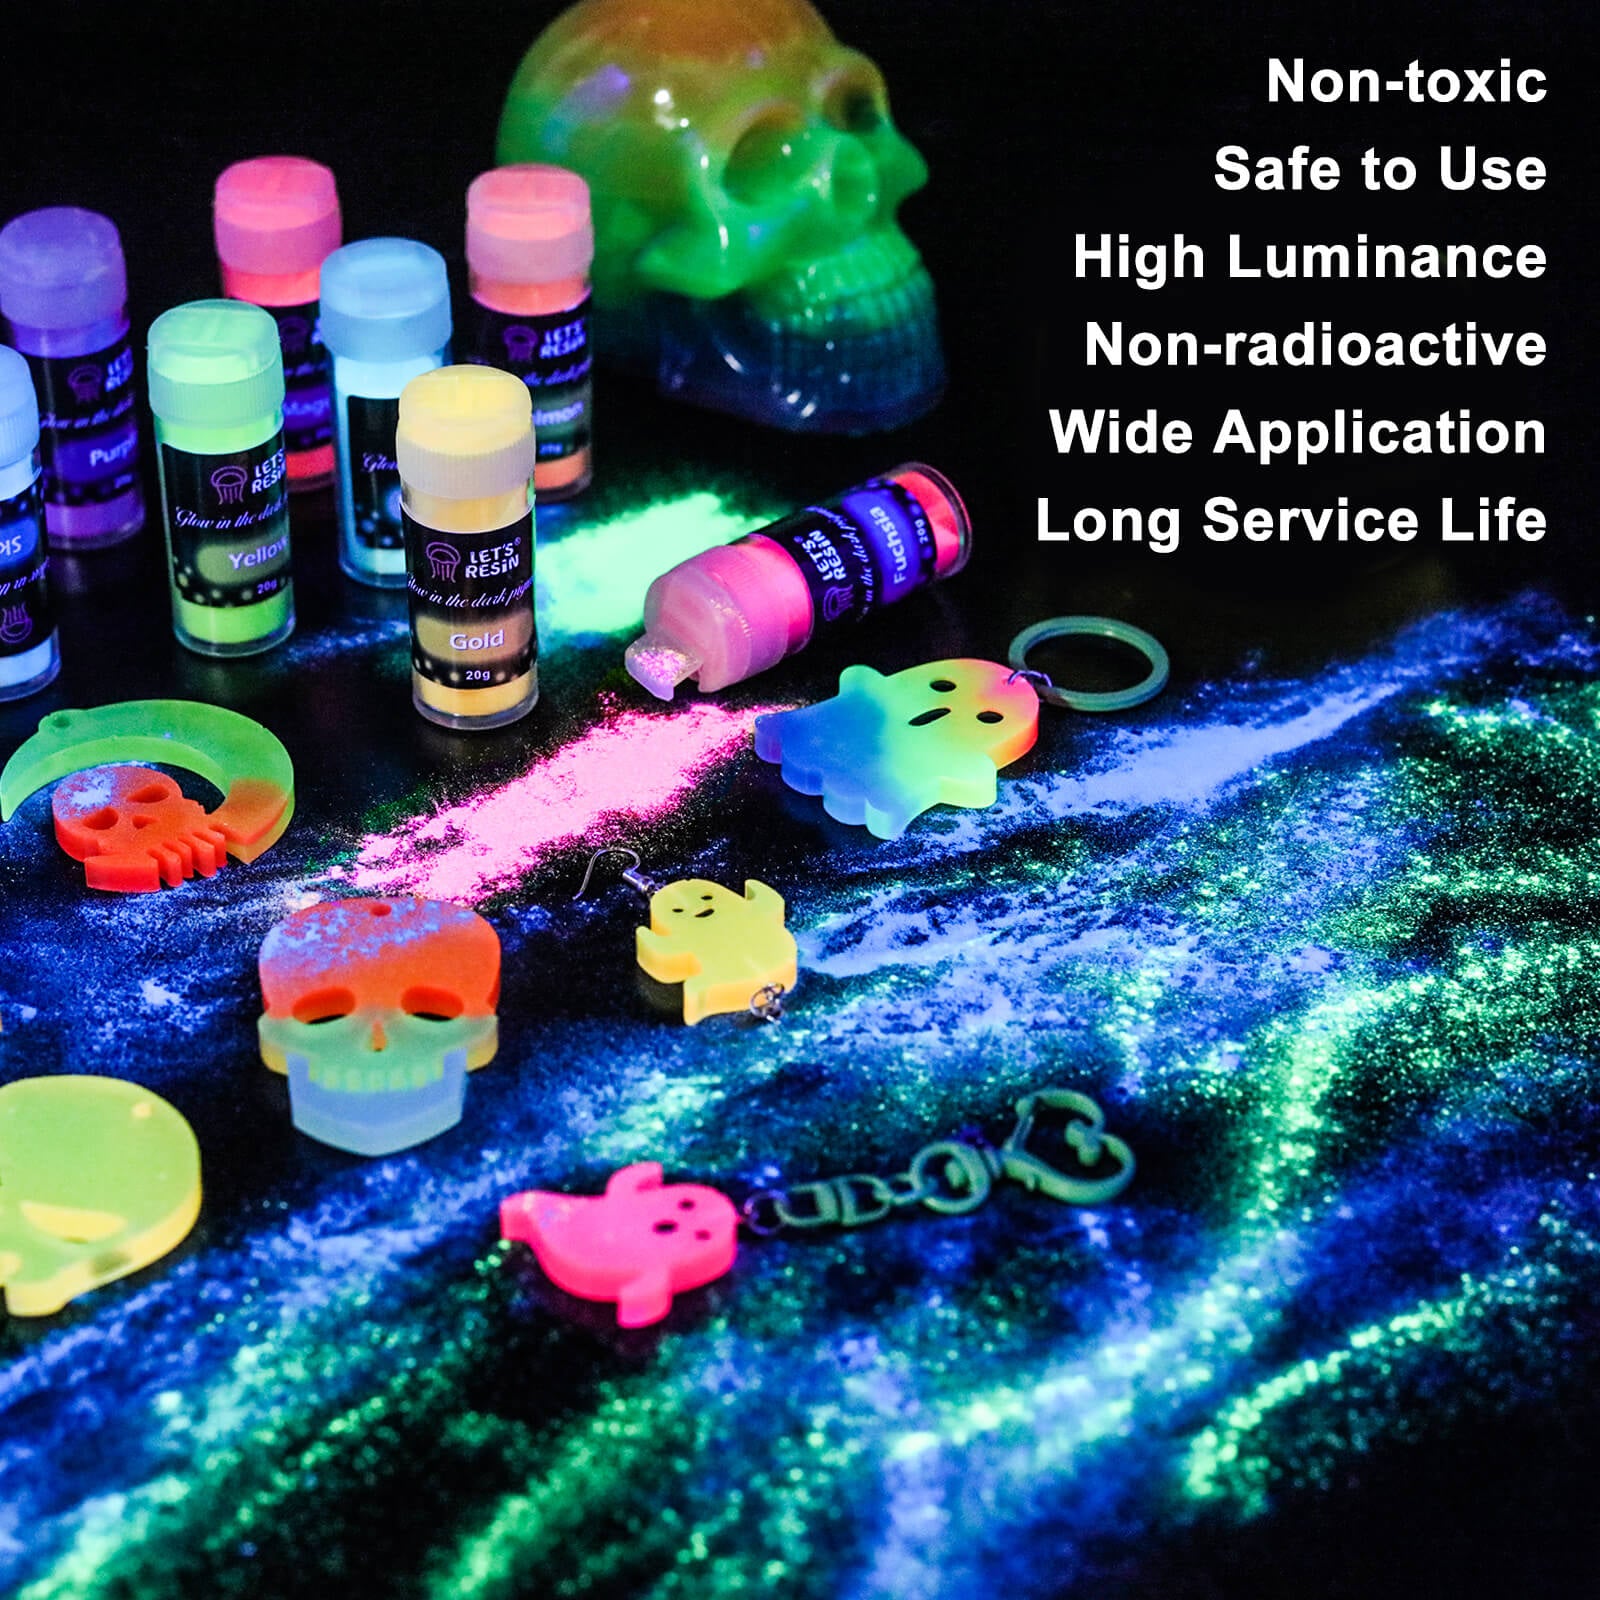 Alien Glow-in-the-Dark Metallic Powder - Counter Top Epoxy